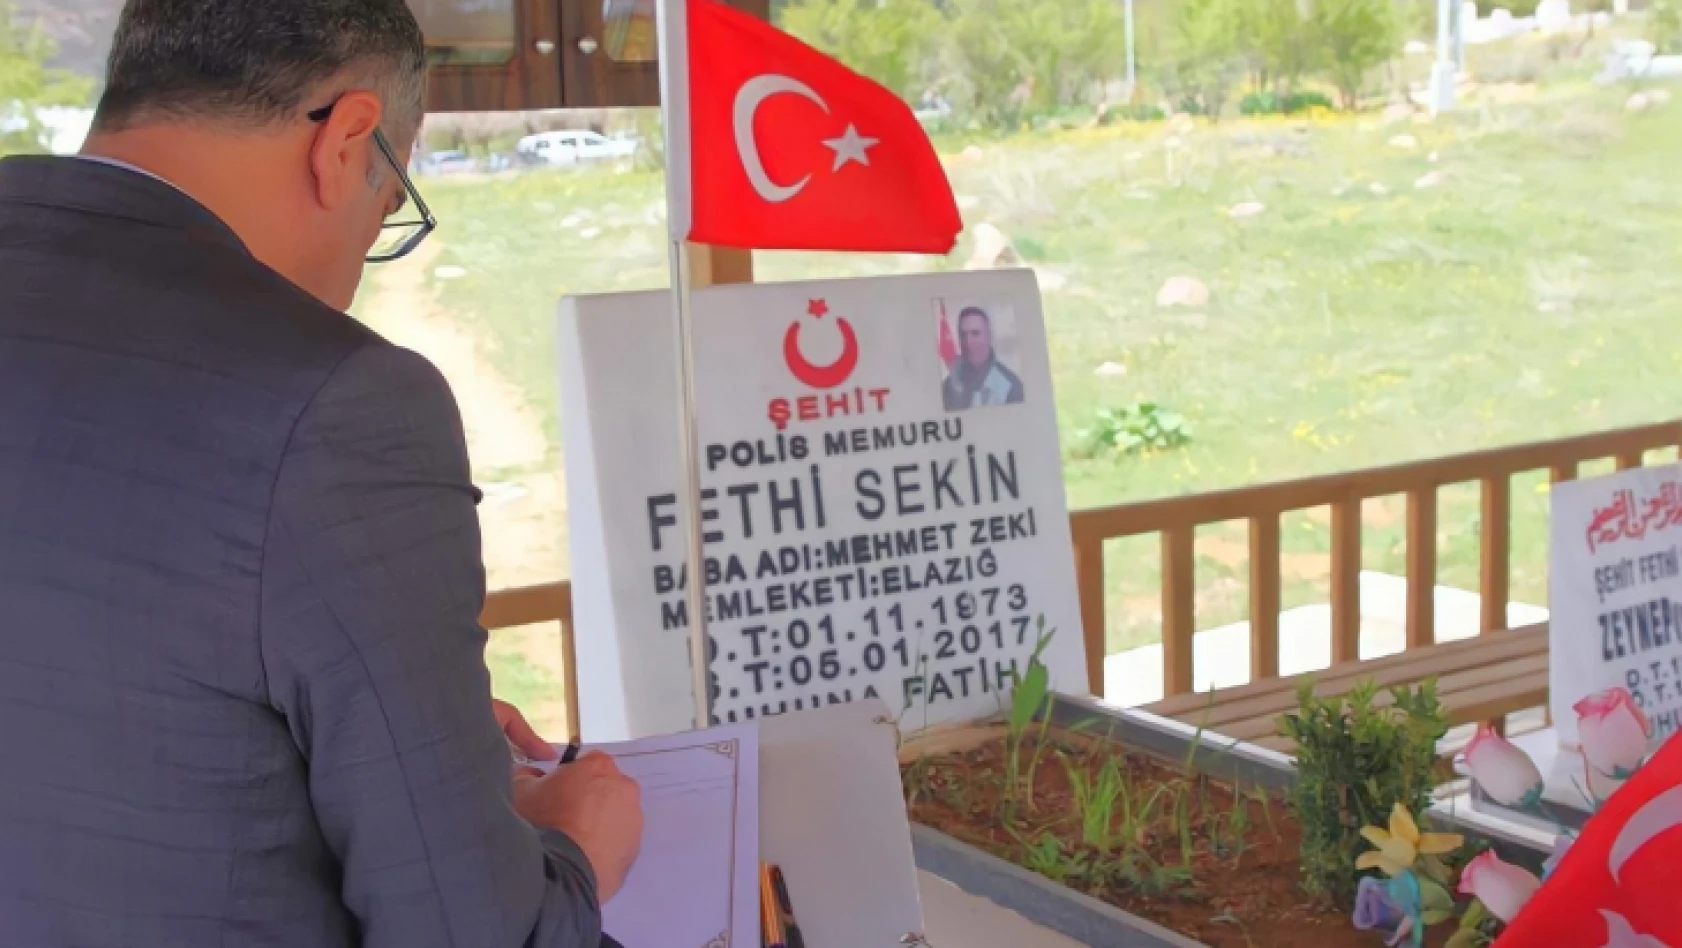 Milletvekili Erol, Şehit Fethi Sekin'i Unutmadı